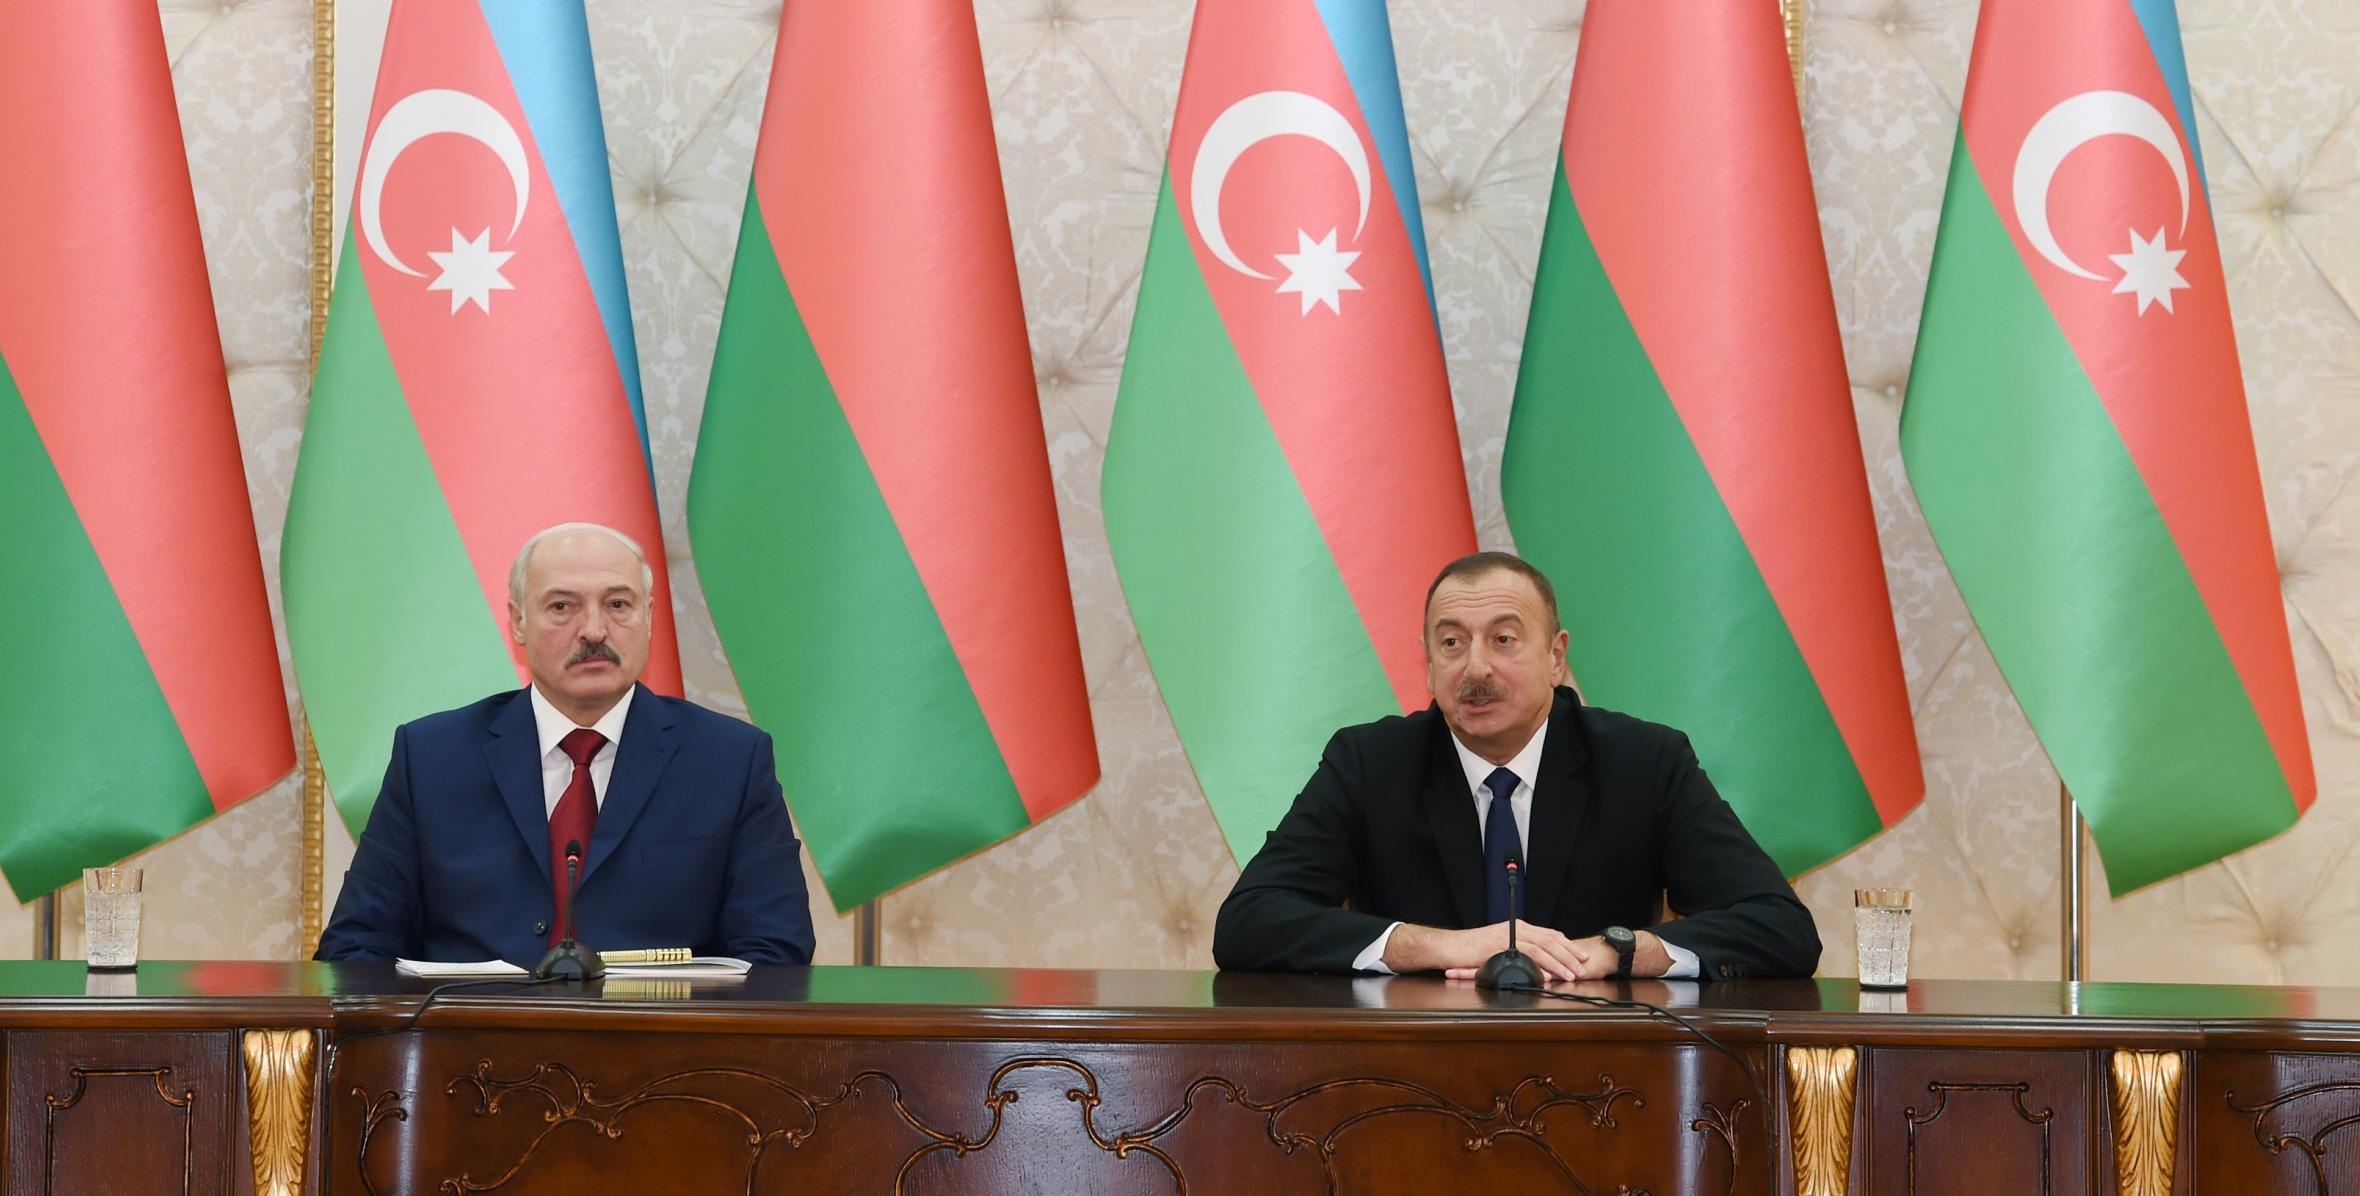 Presidents of Azerbaijan and Belarus made press statements